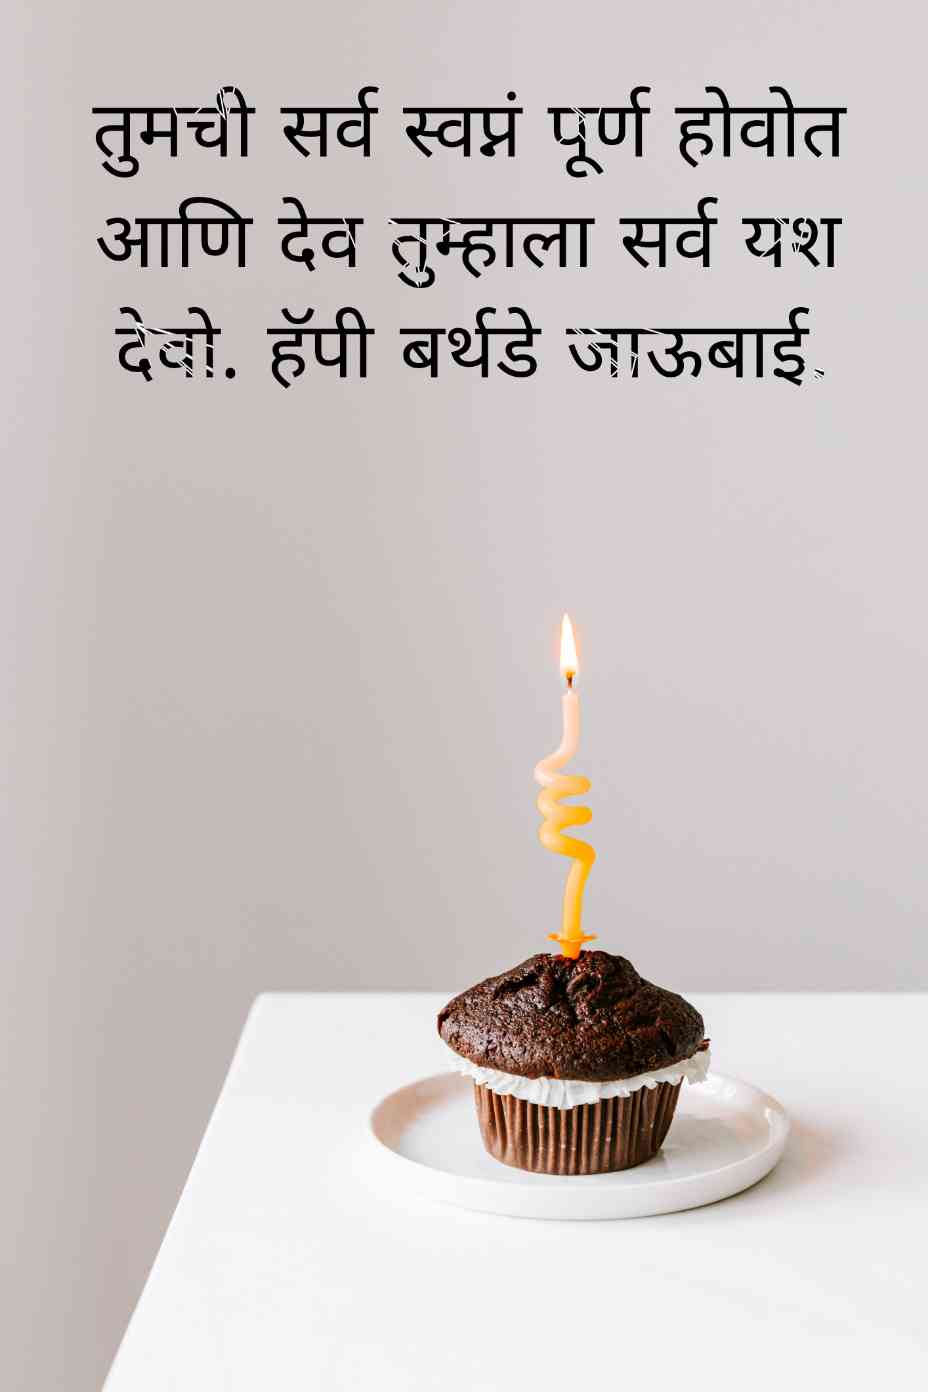 Birthday Wishes For Jaubai In Marathi